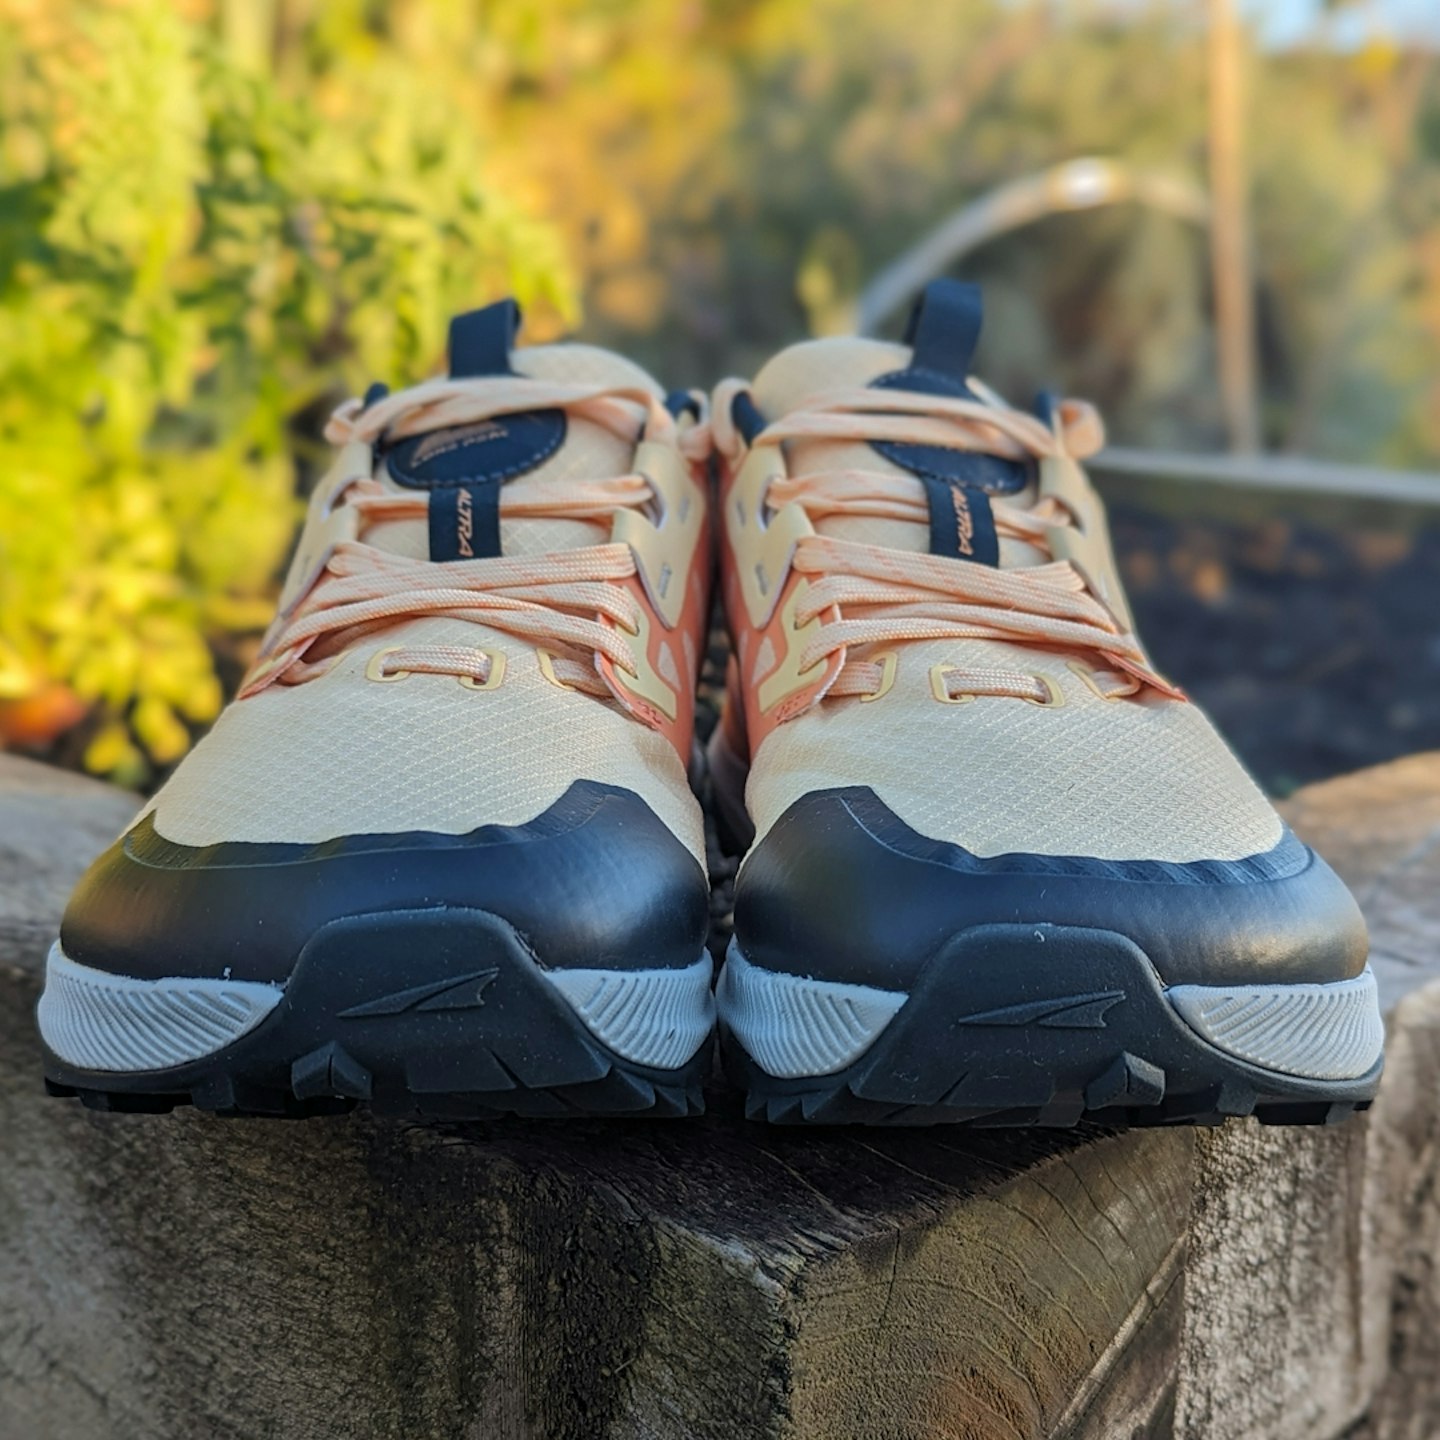 Altra Lone Peak 7 minimalist trail running shoes toebox